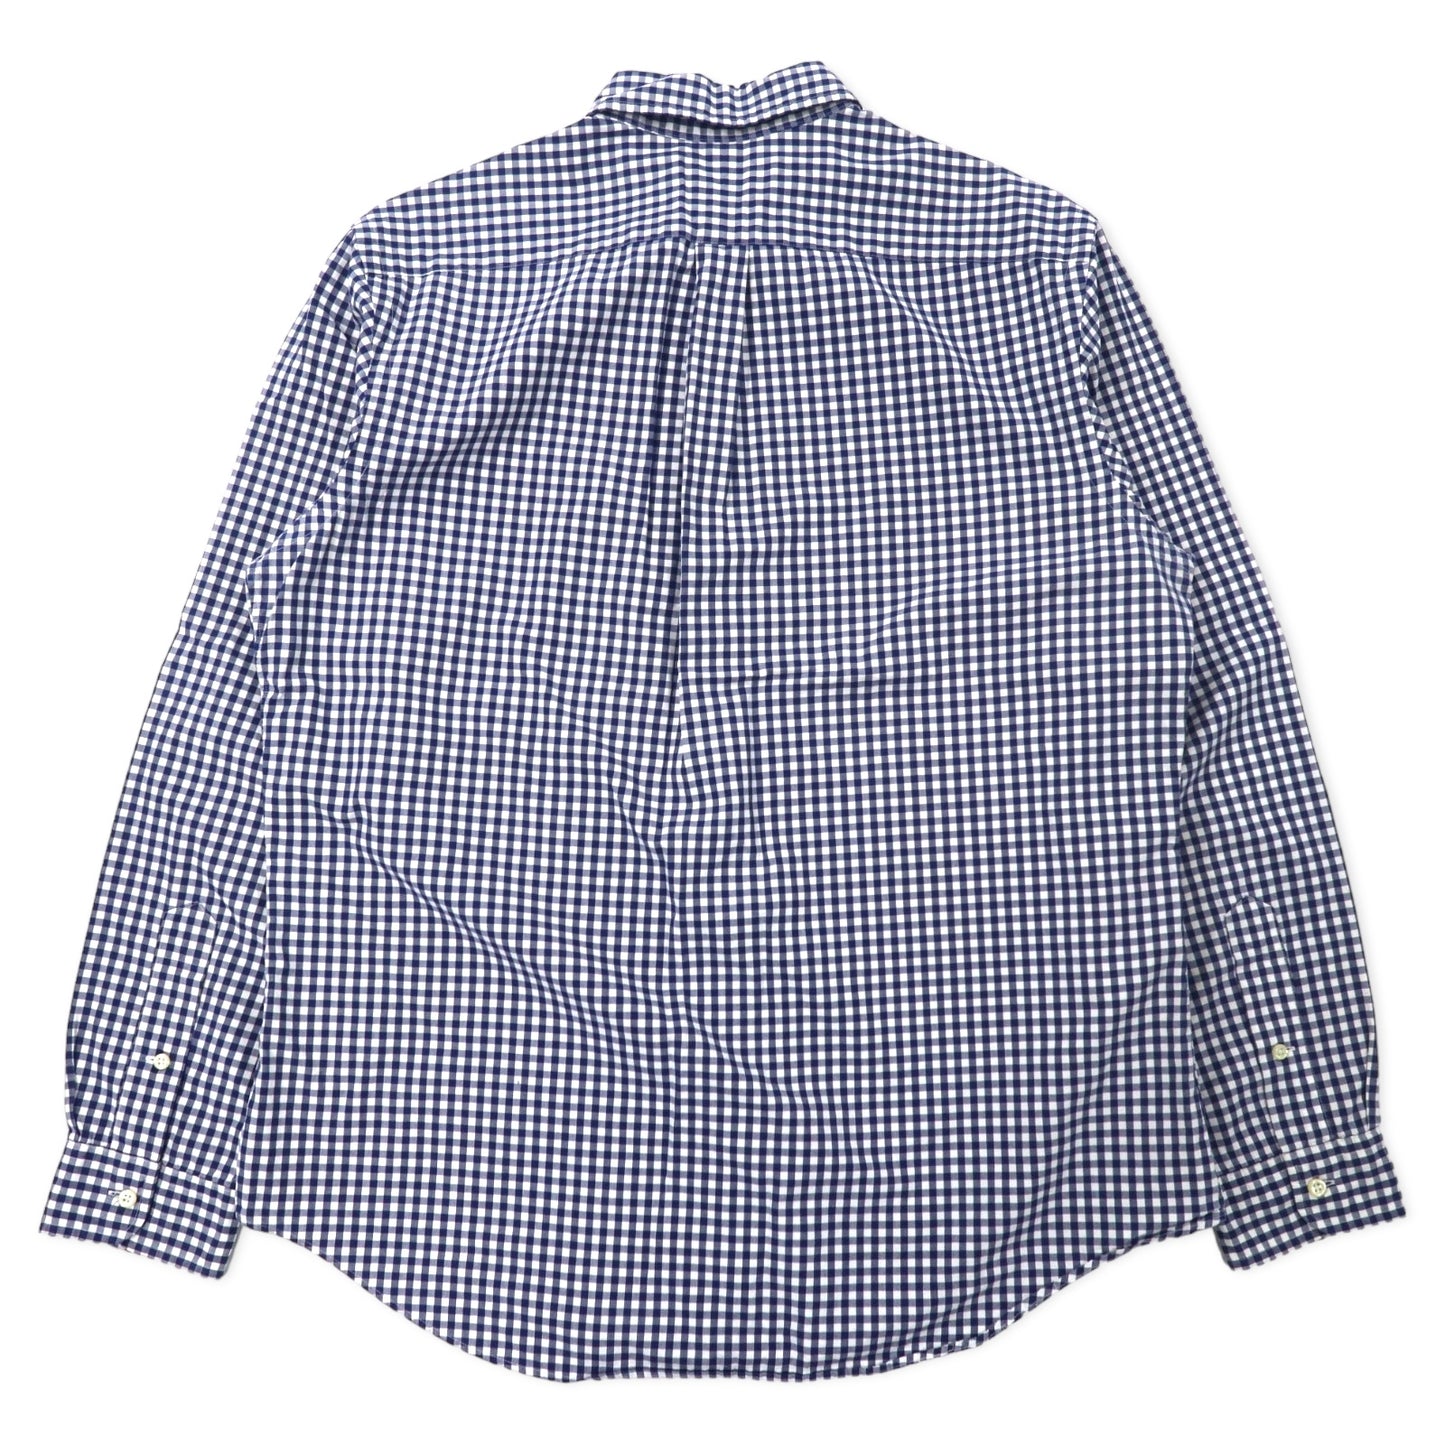 RALPH LAUREN ギンガムチェック ボタンダウンシャツ L ブルー コットン スモールポニー刺繍